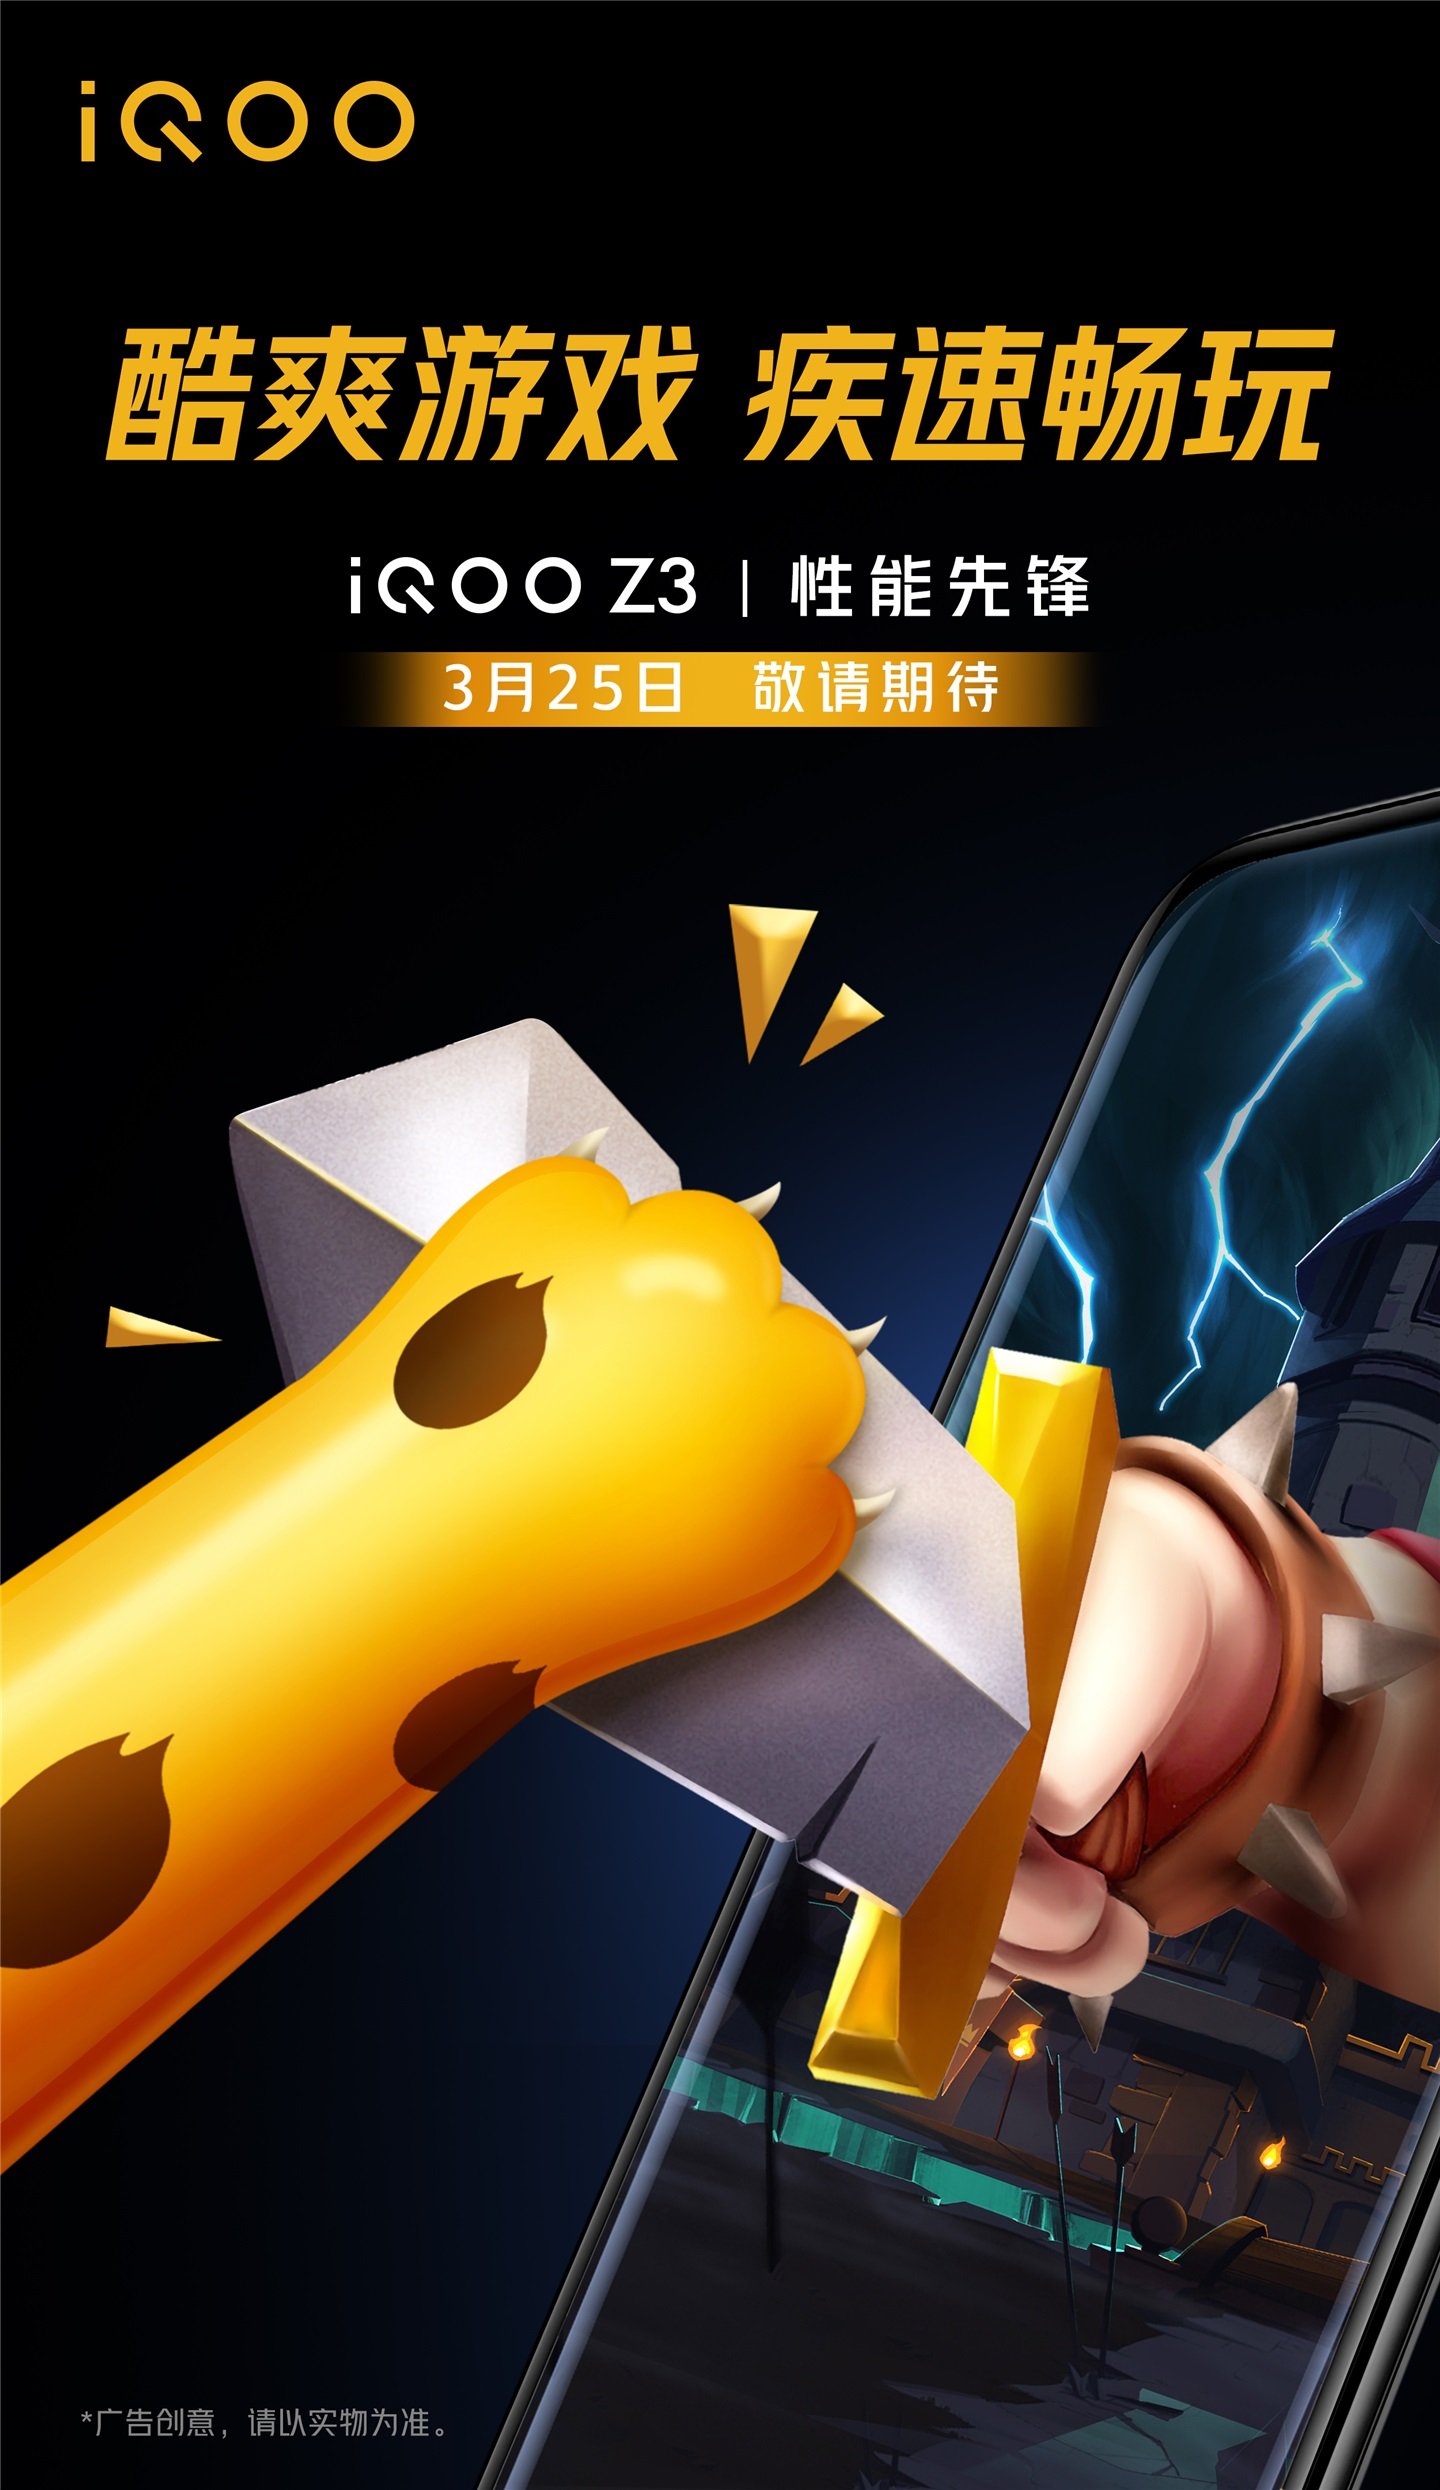 iQOO Z3 Screen Specifications